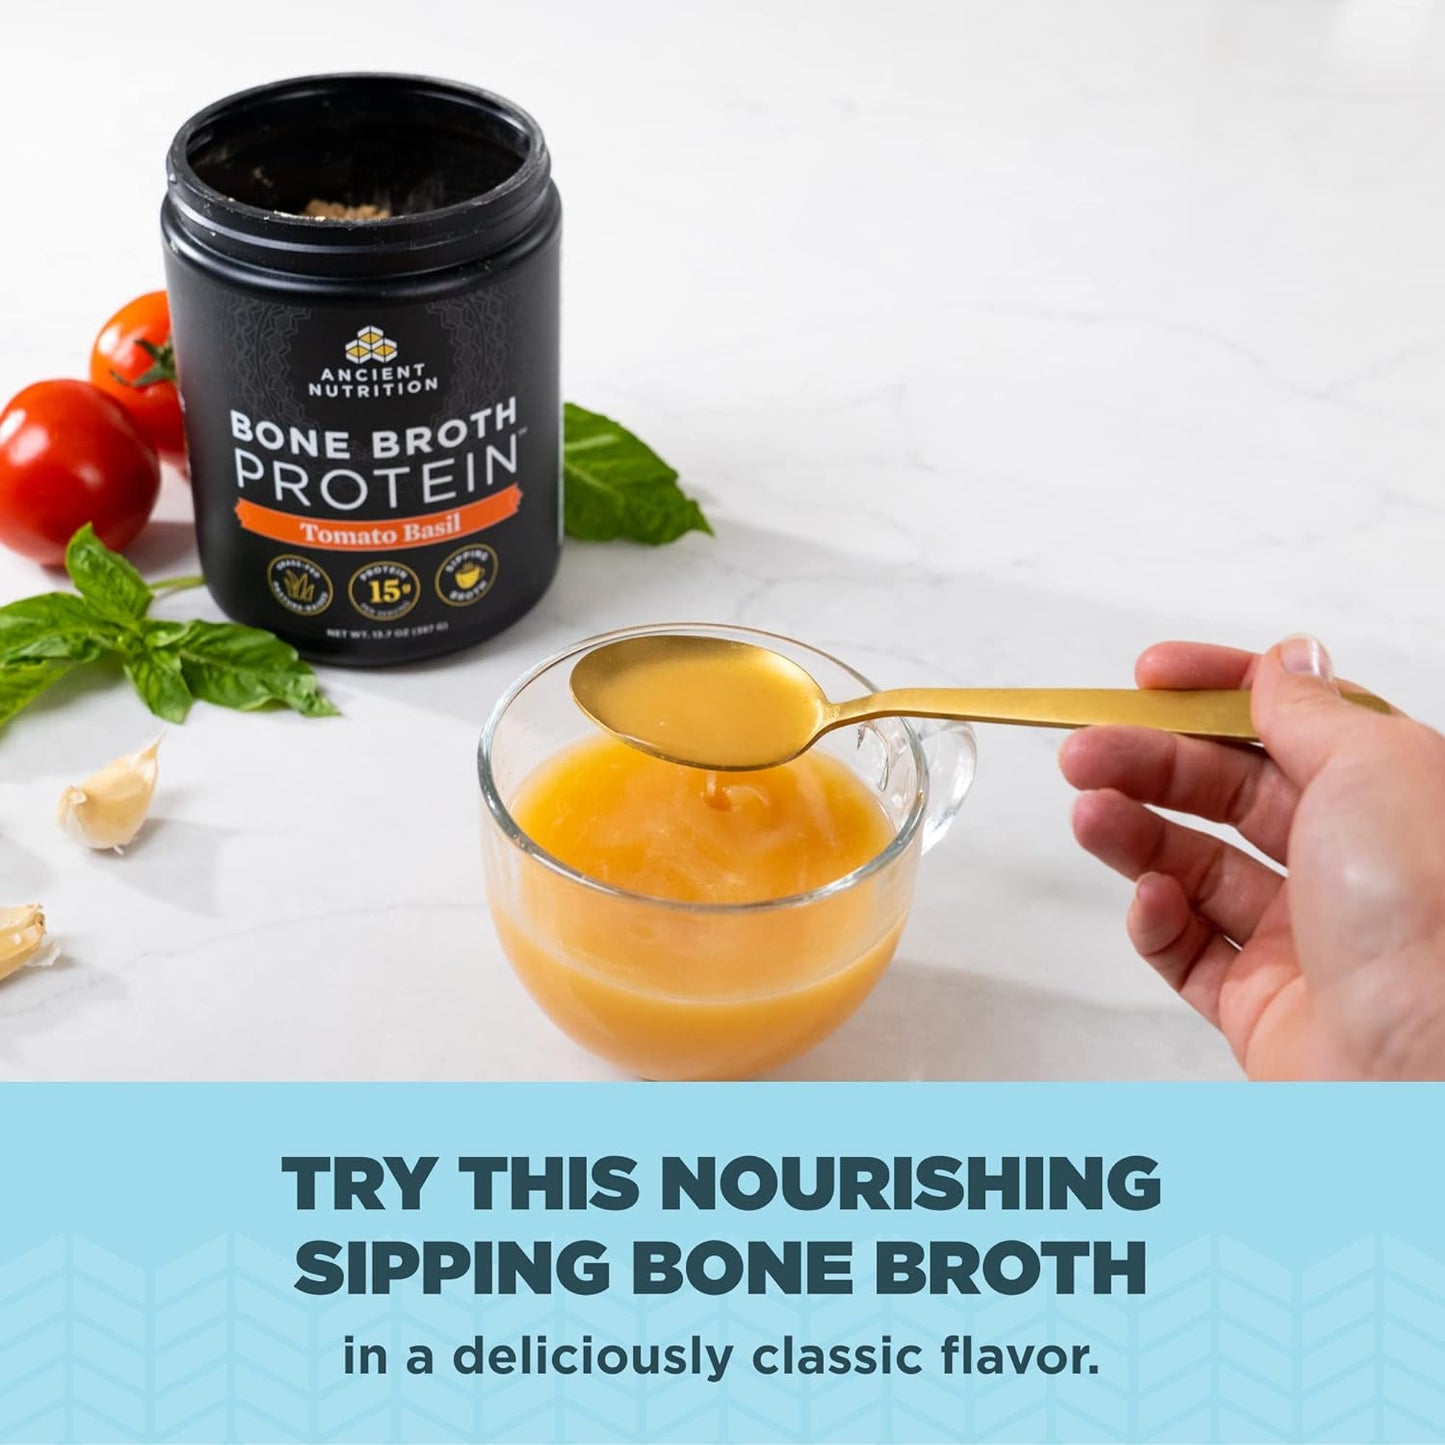 Ancient Nutrition Bone Broth Protein | Powder Tomato Basil (15 Servings)